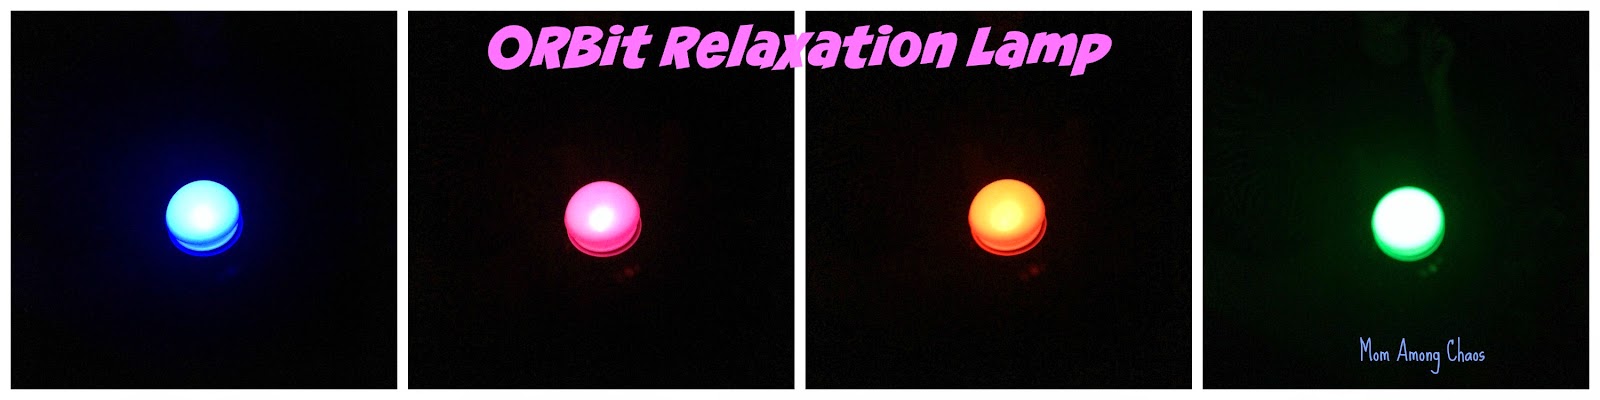 lamp, light, ORBit, relaxation, verilux, 